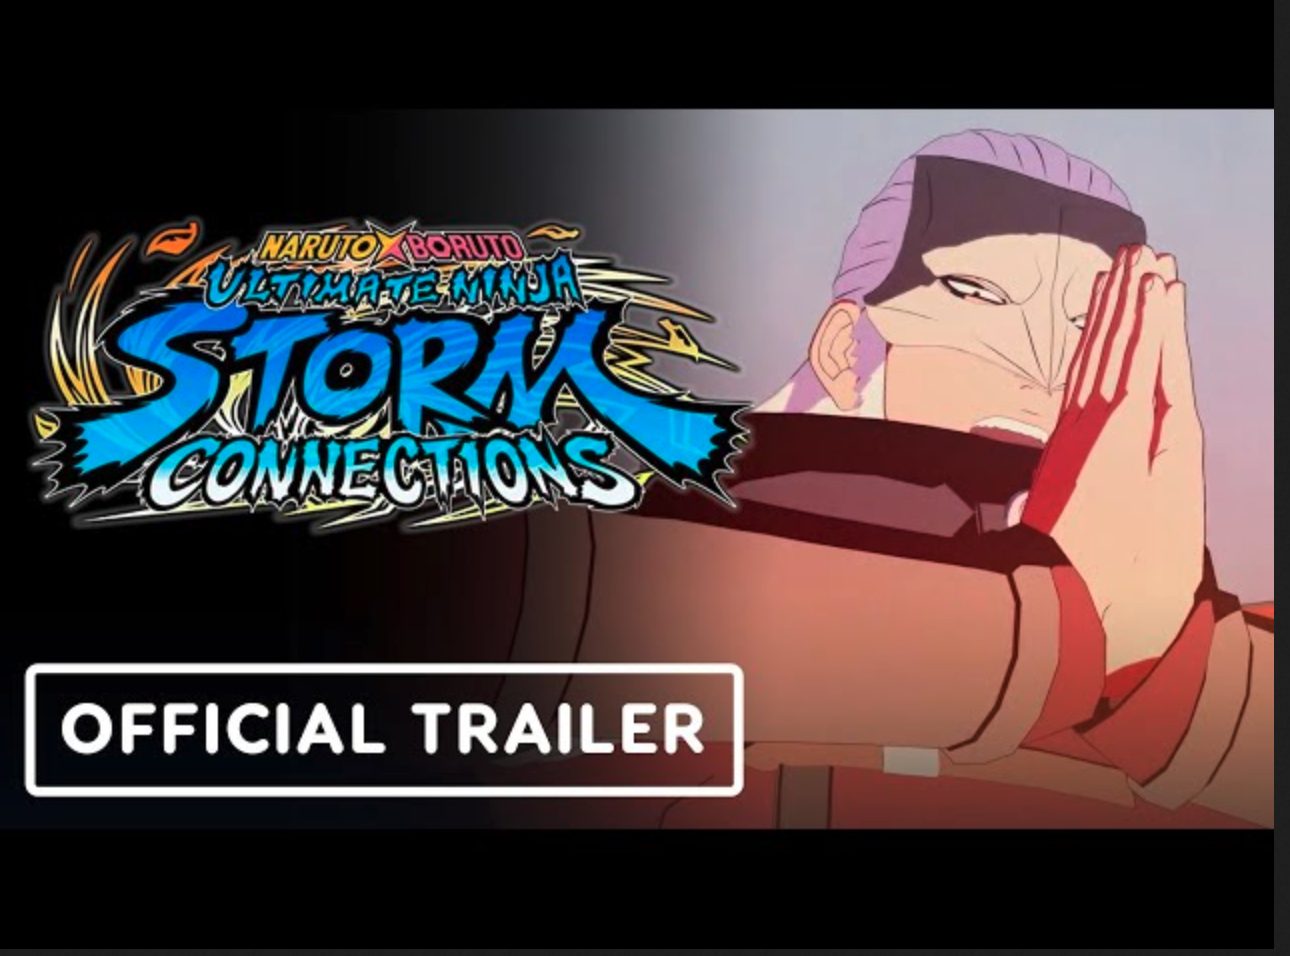 Naruto Storm 4 – trailer internacional